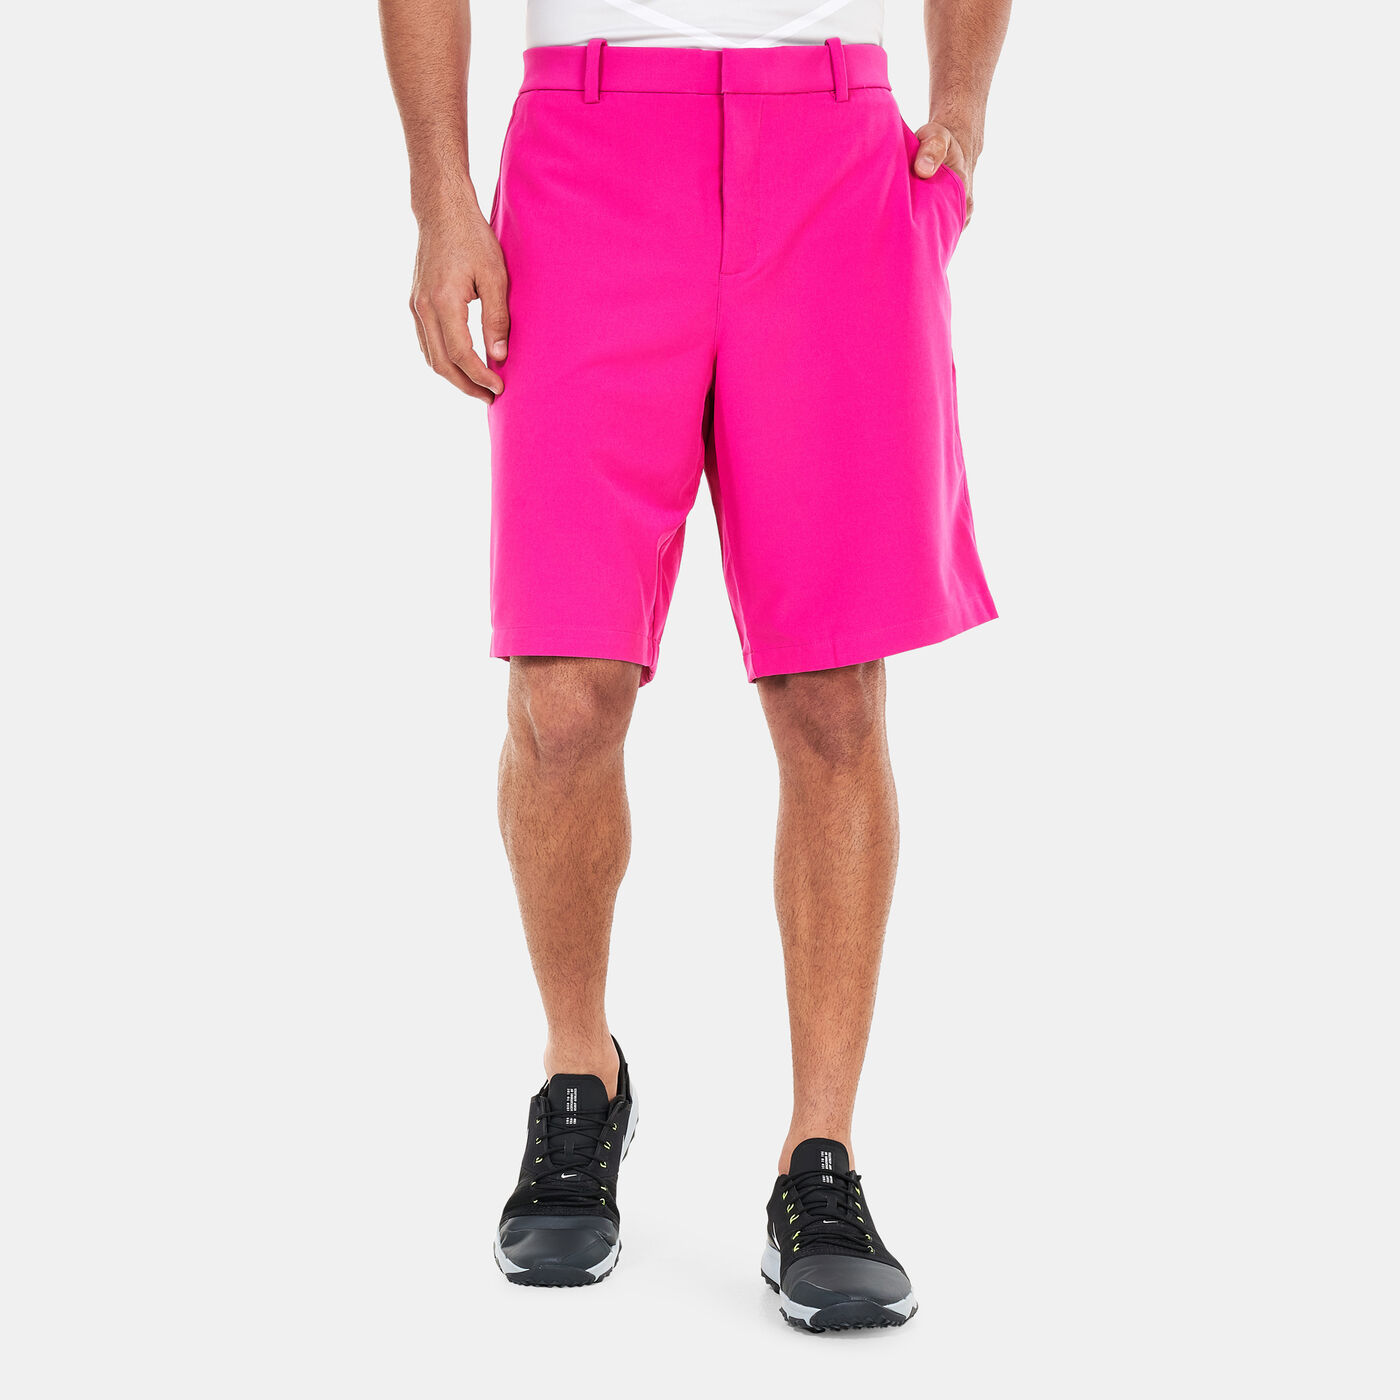 Men's Dri-FIT Shorts